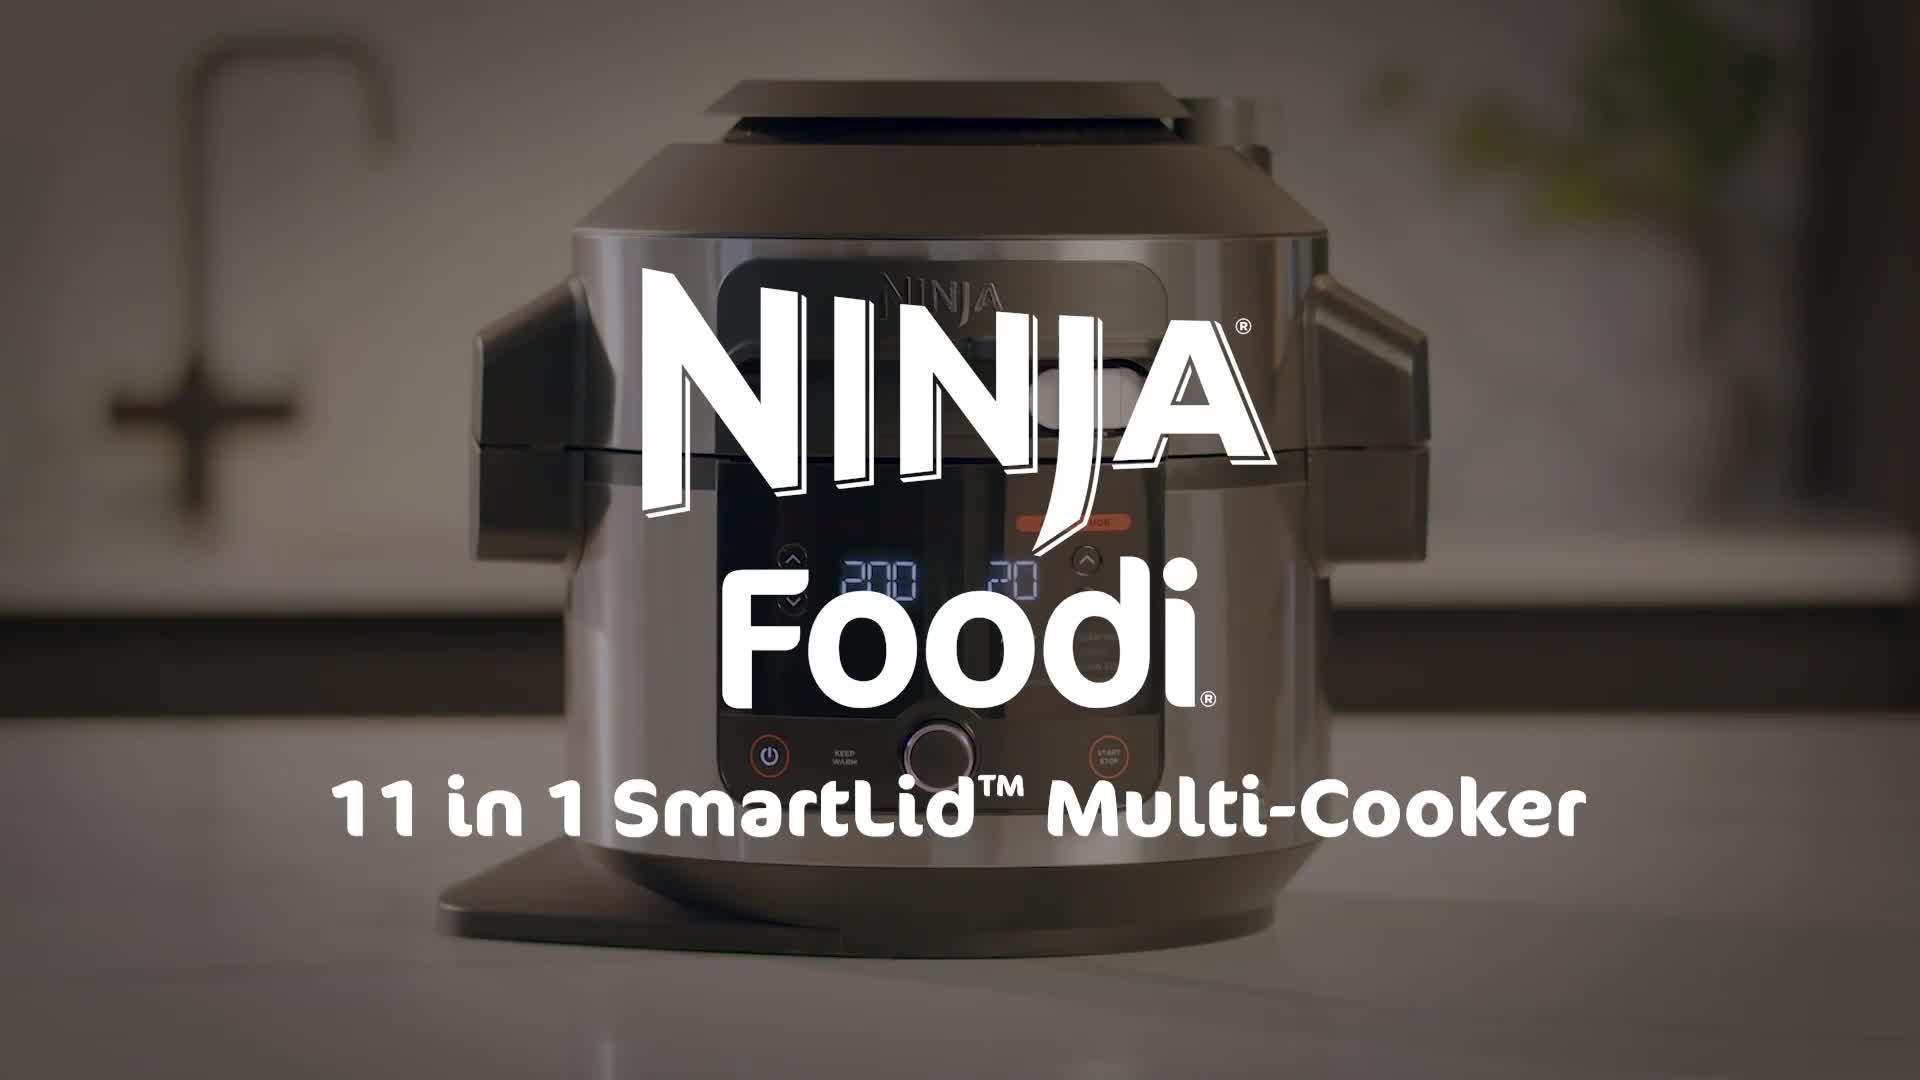 Ninja Foodi 11 in 1 SmarLid Multi-Cooker 6L. - OL550EU